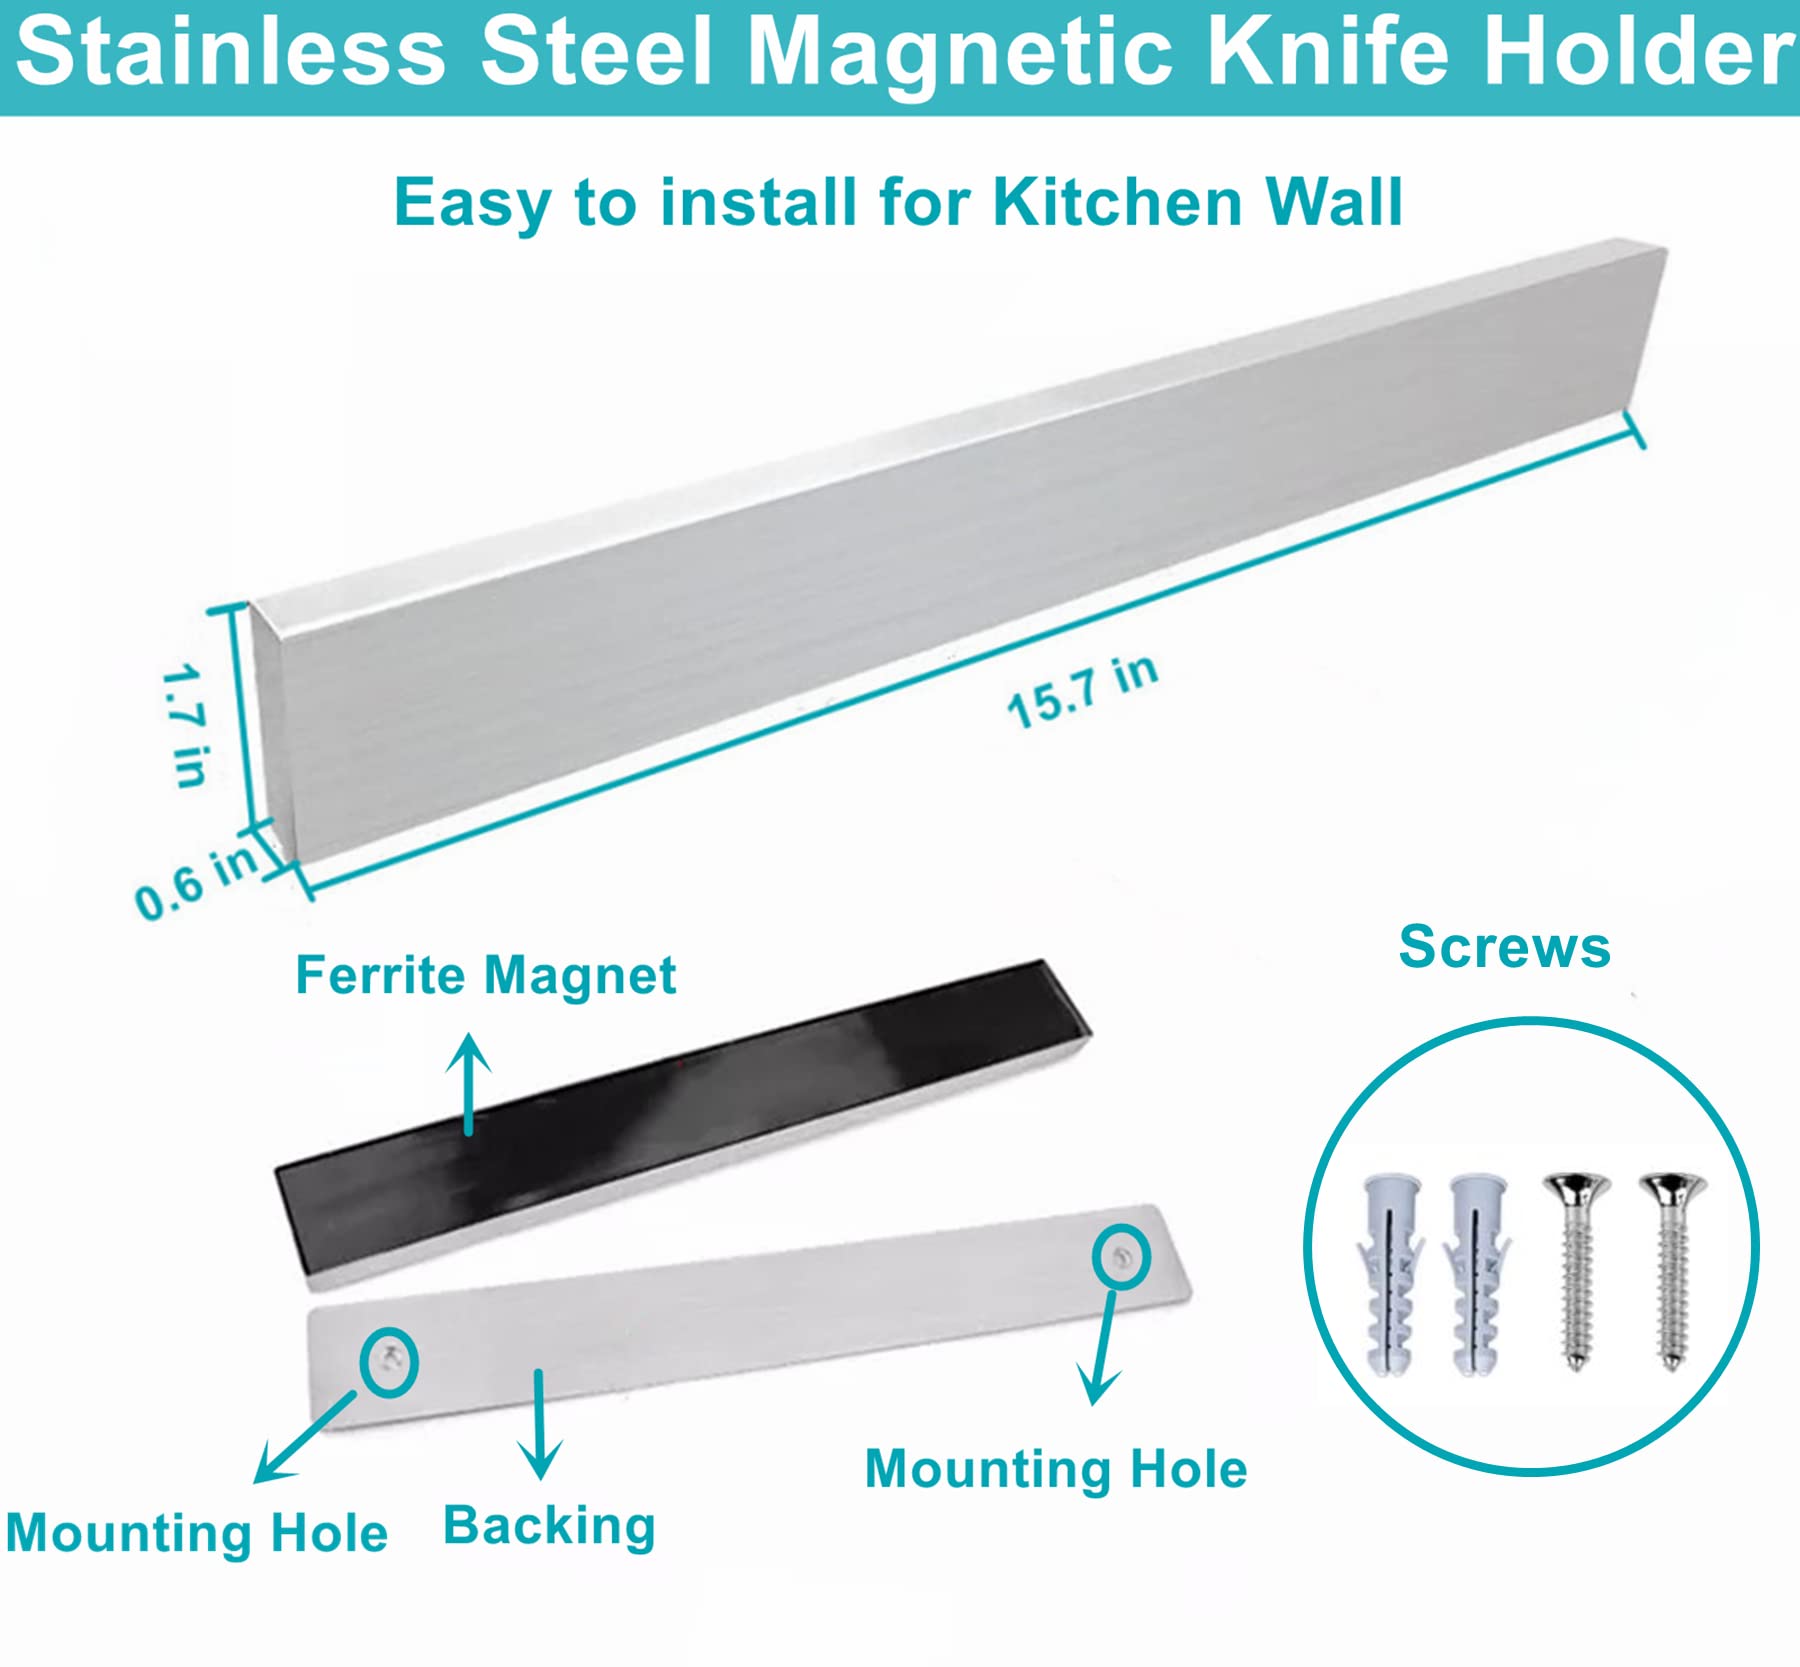 Magnetic Knife Holder for Wall 16 Inch Knife Magnetic Strip Refrigerator Knife Magnet Bar Wall Mount Knife Rack for RV Kitchen Utensil Holder Metal Tool Holder Knife Block for Kitchen Organization